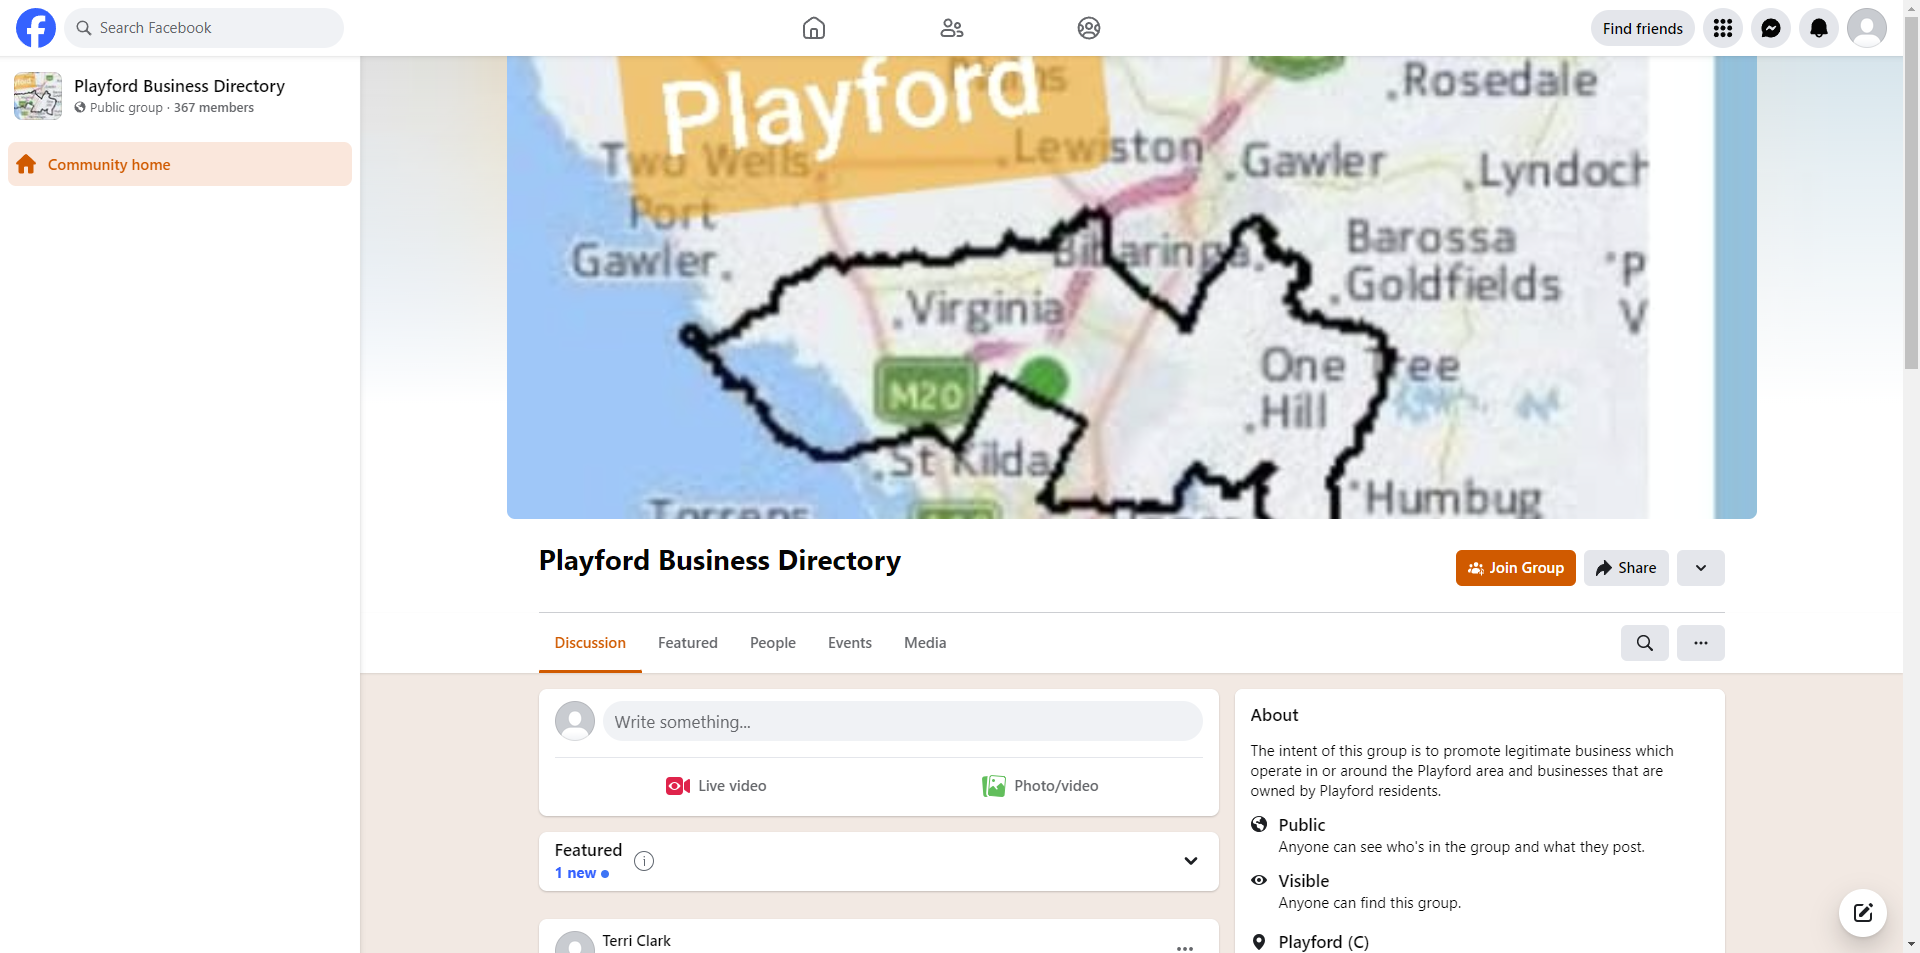 Playford Business Directory